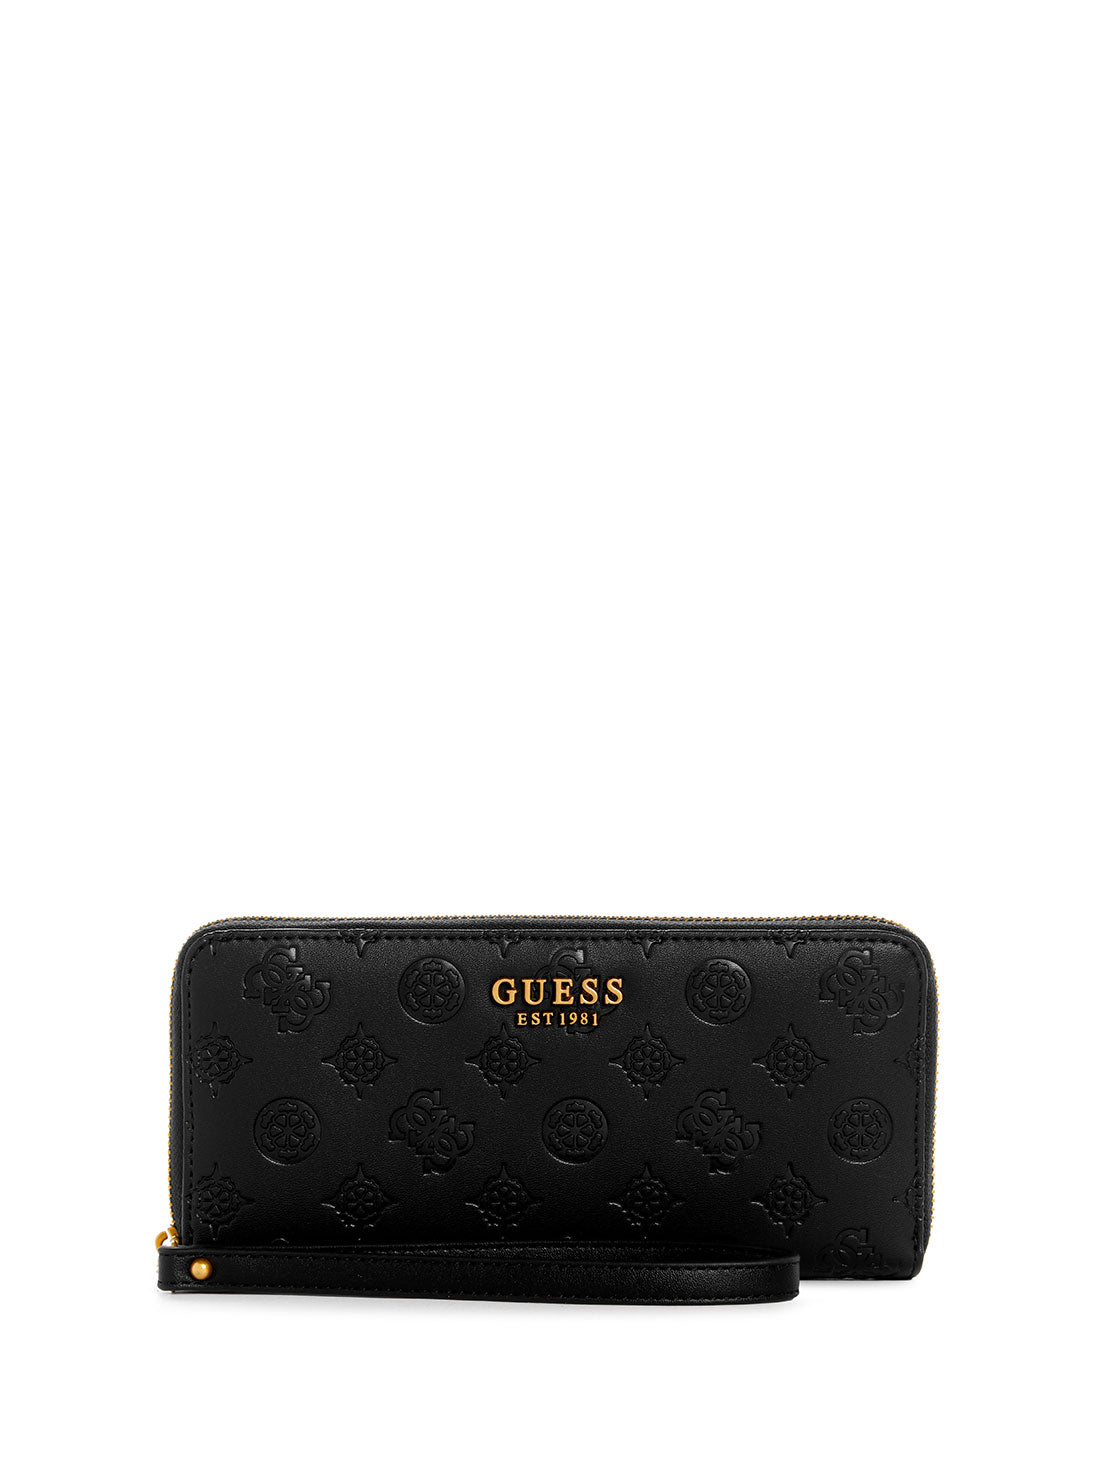 GUESS Women's Black Logo Laurel Large Wallet PA850046 Front View